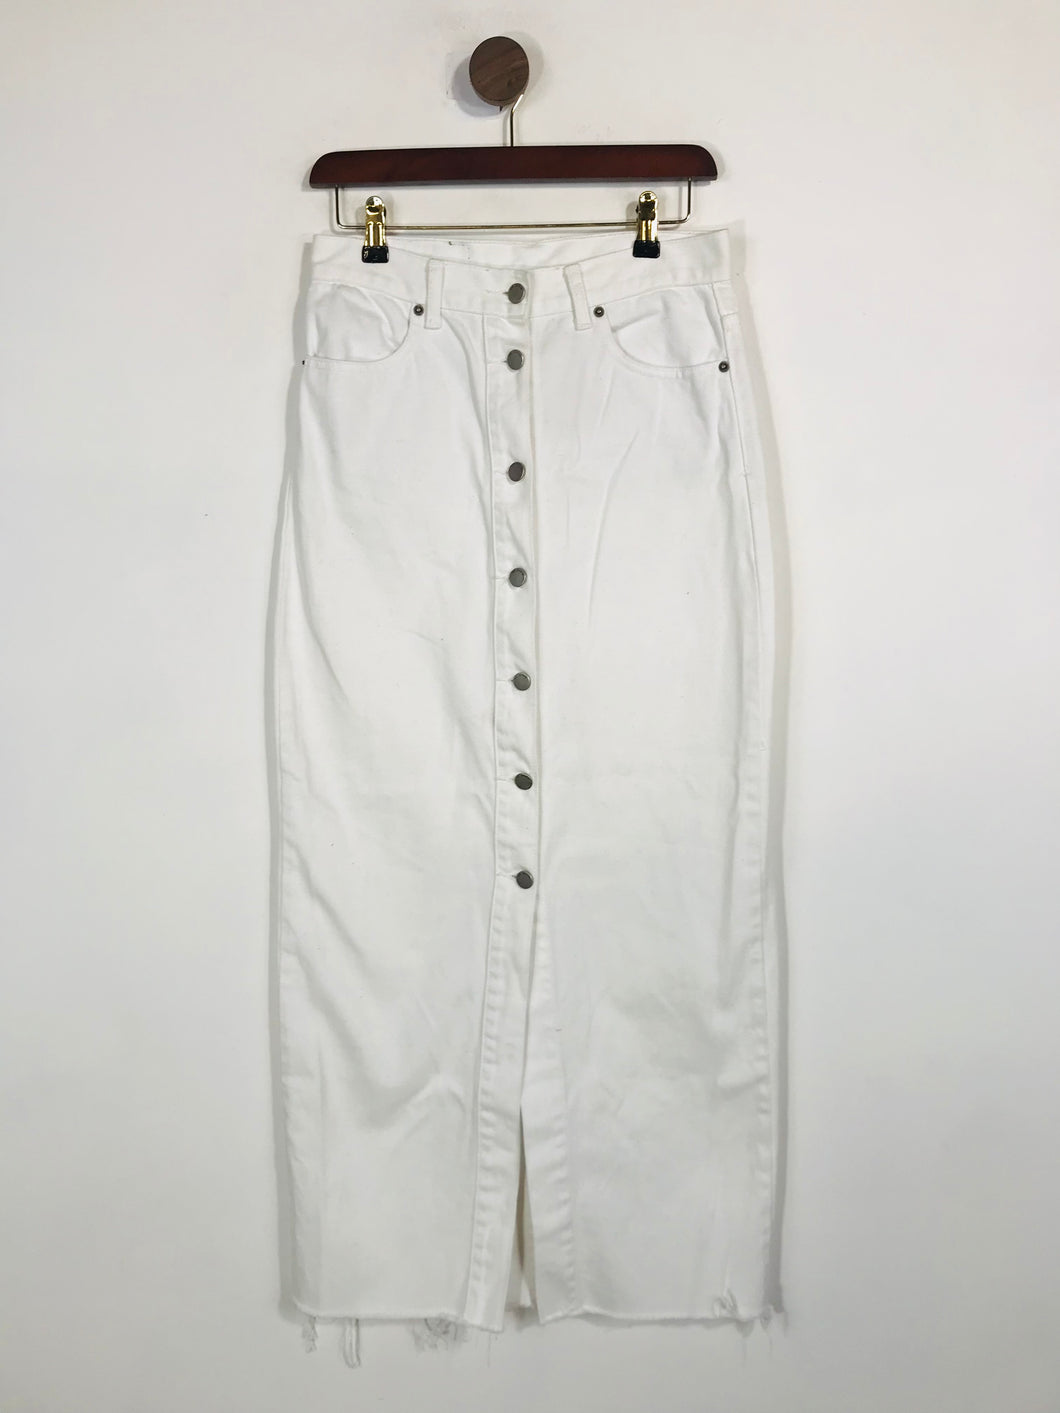 DrDenim Women's Cotton A-Line Skirt | M UK10-12 | White